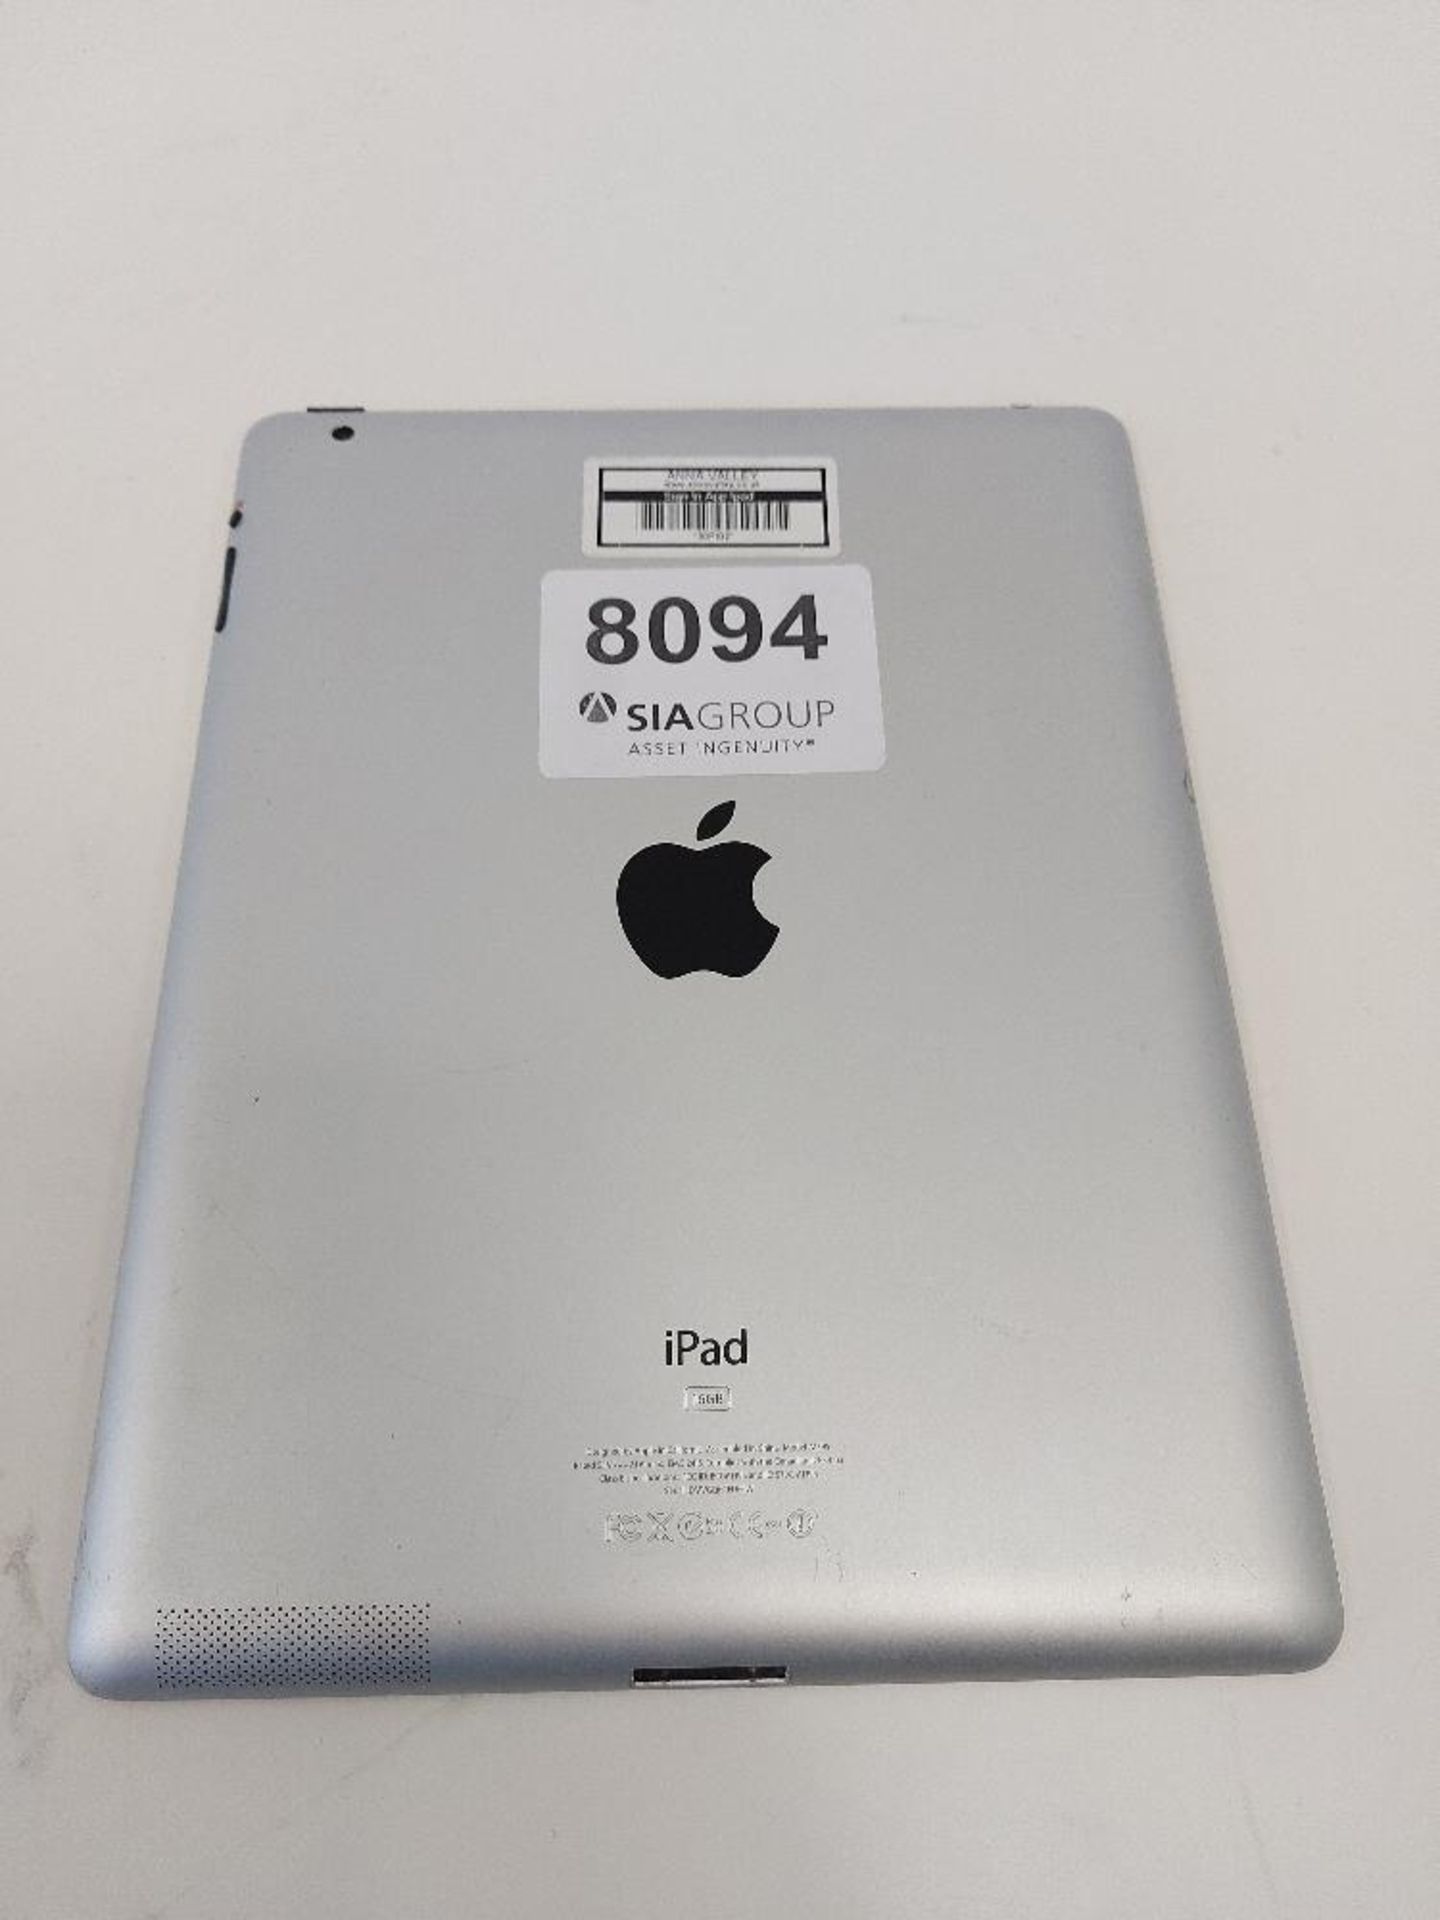 Apple iPad A1395 - Image 2 of 3